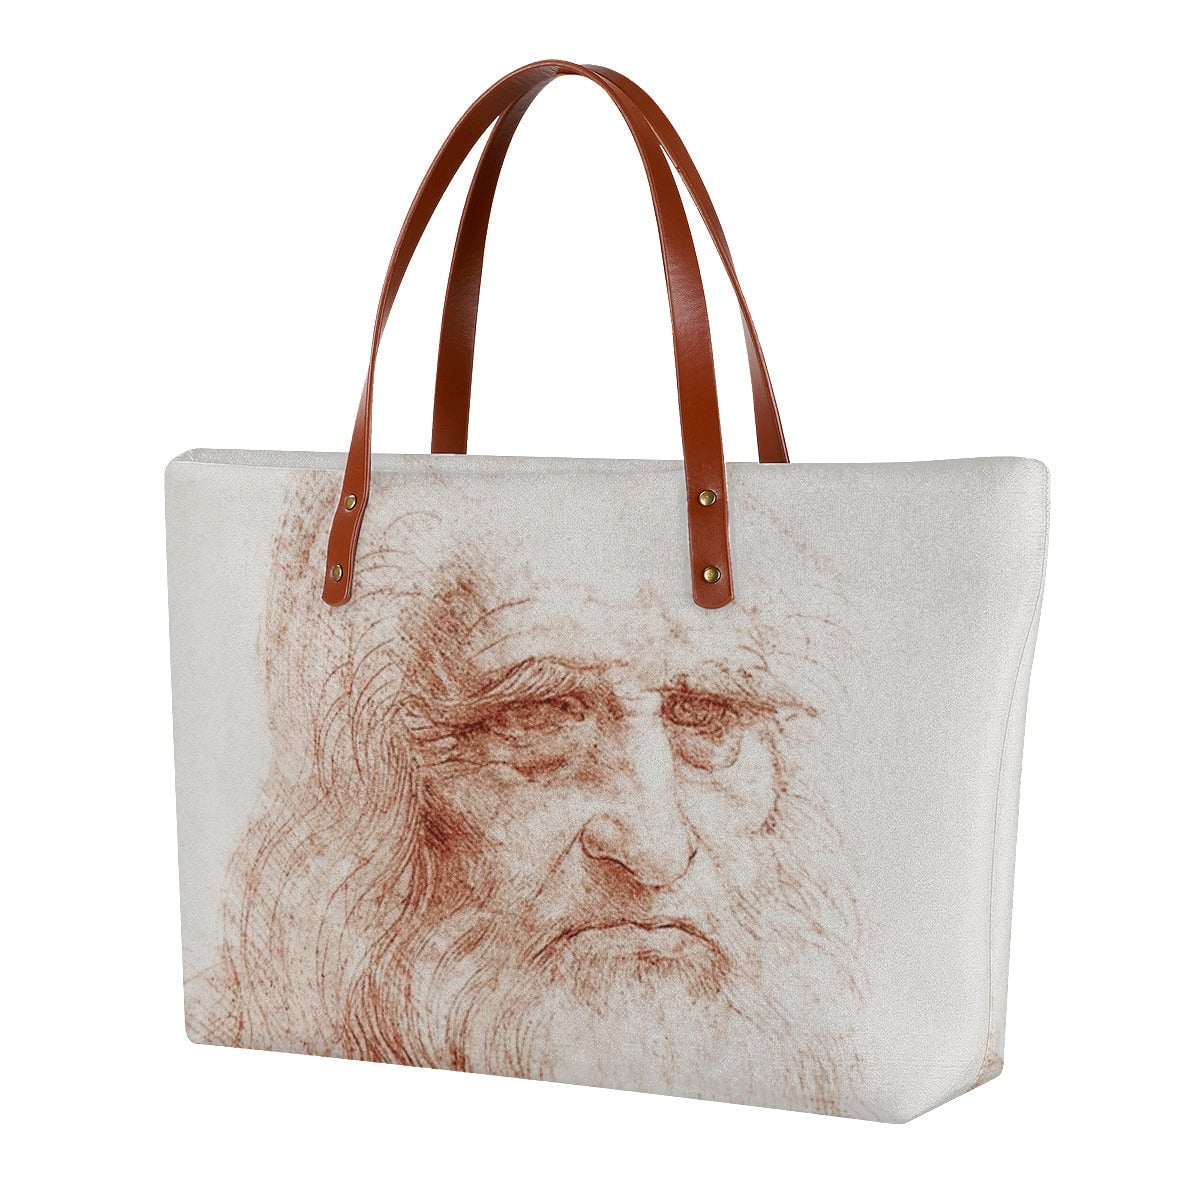 Leonardo da Vinci’s Self-portrait Art Tote Bag